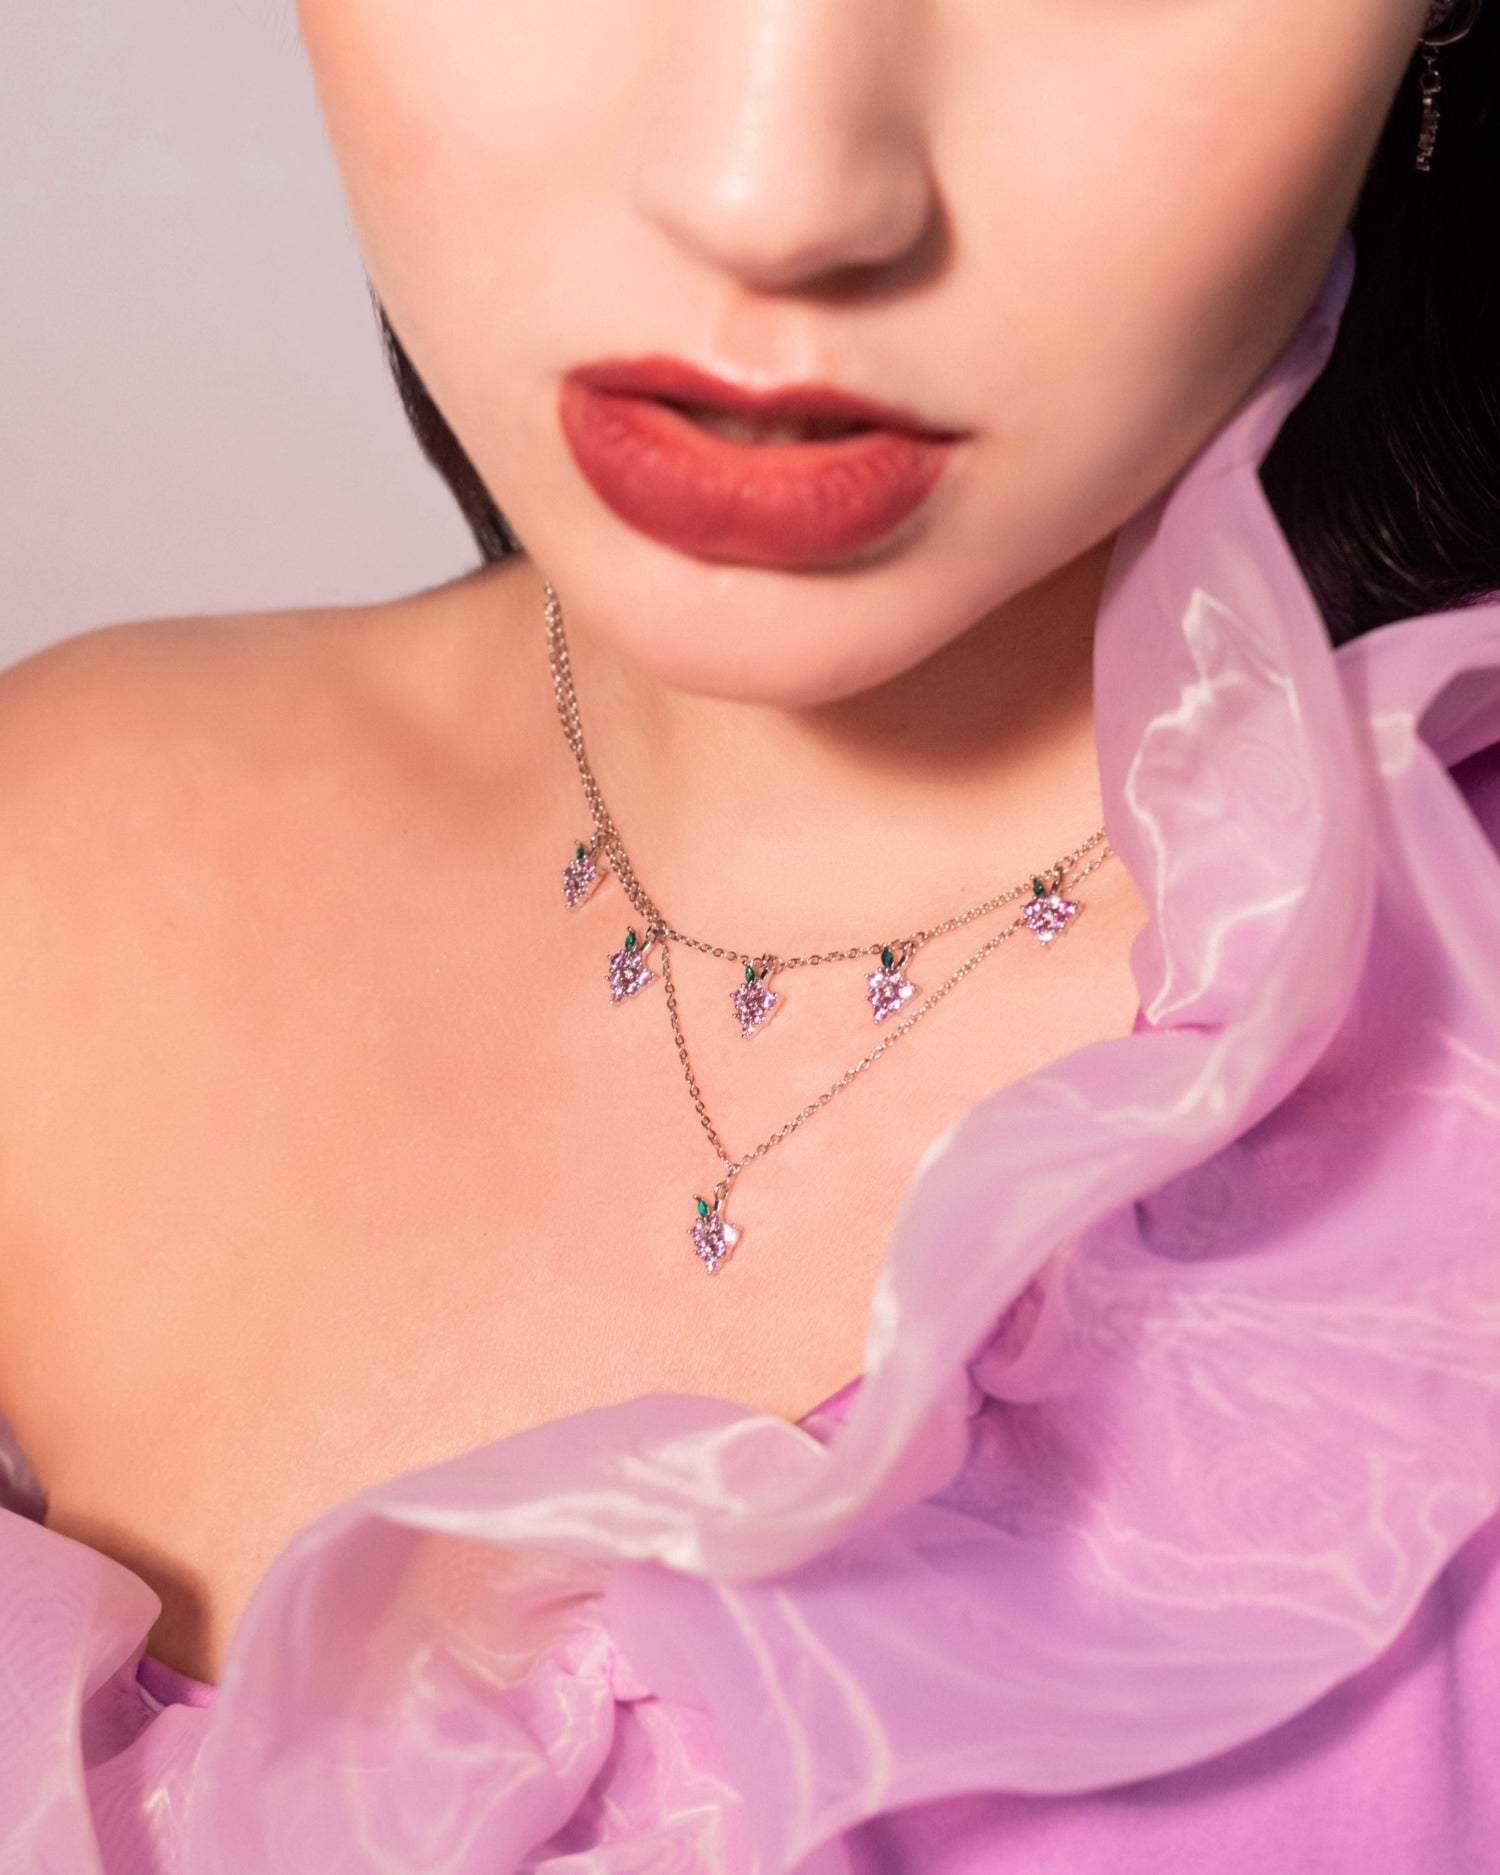 Grape pendant necklace